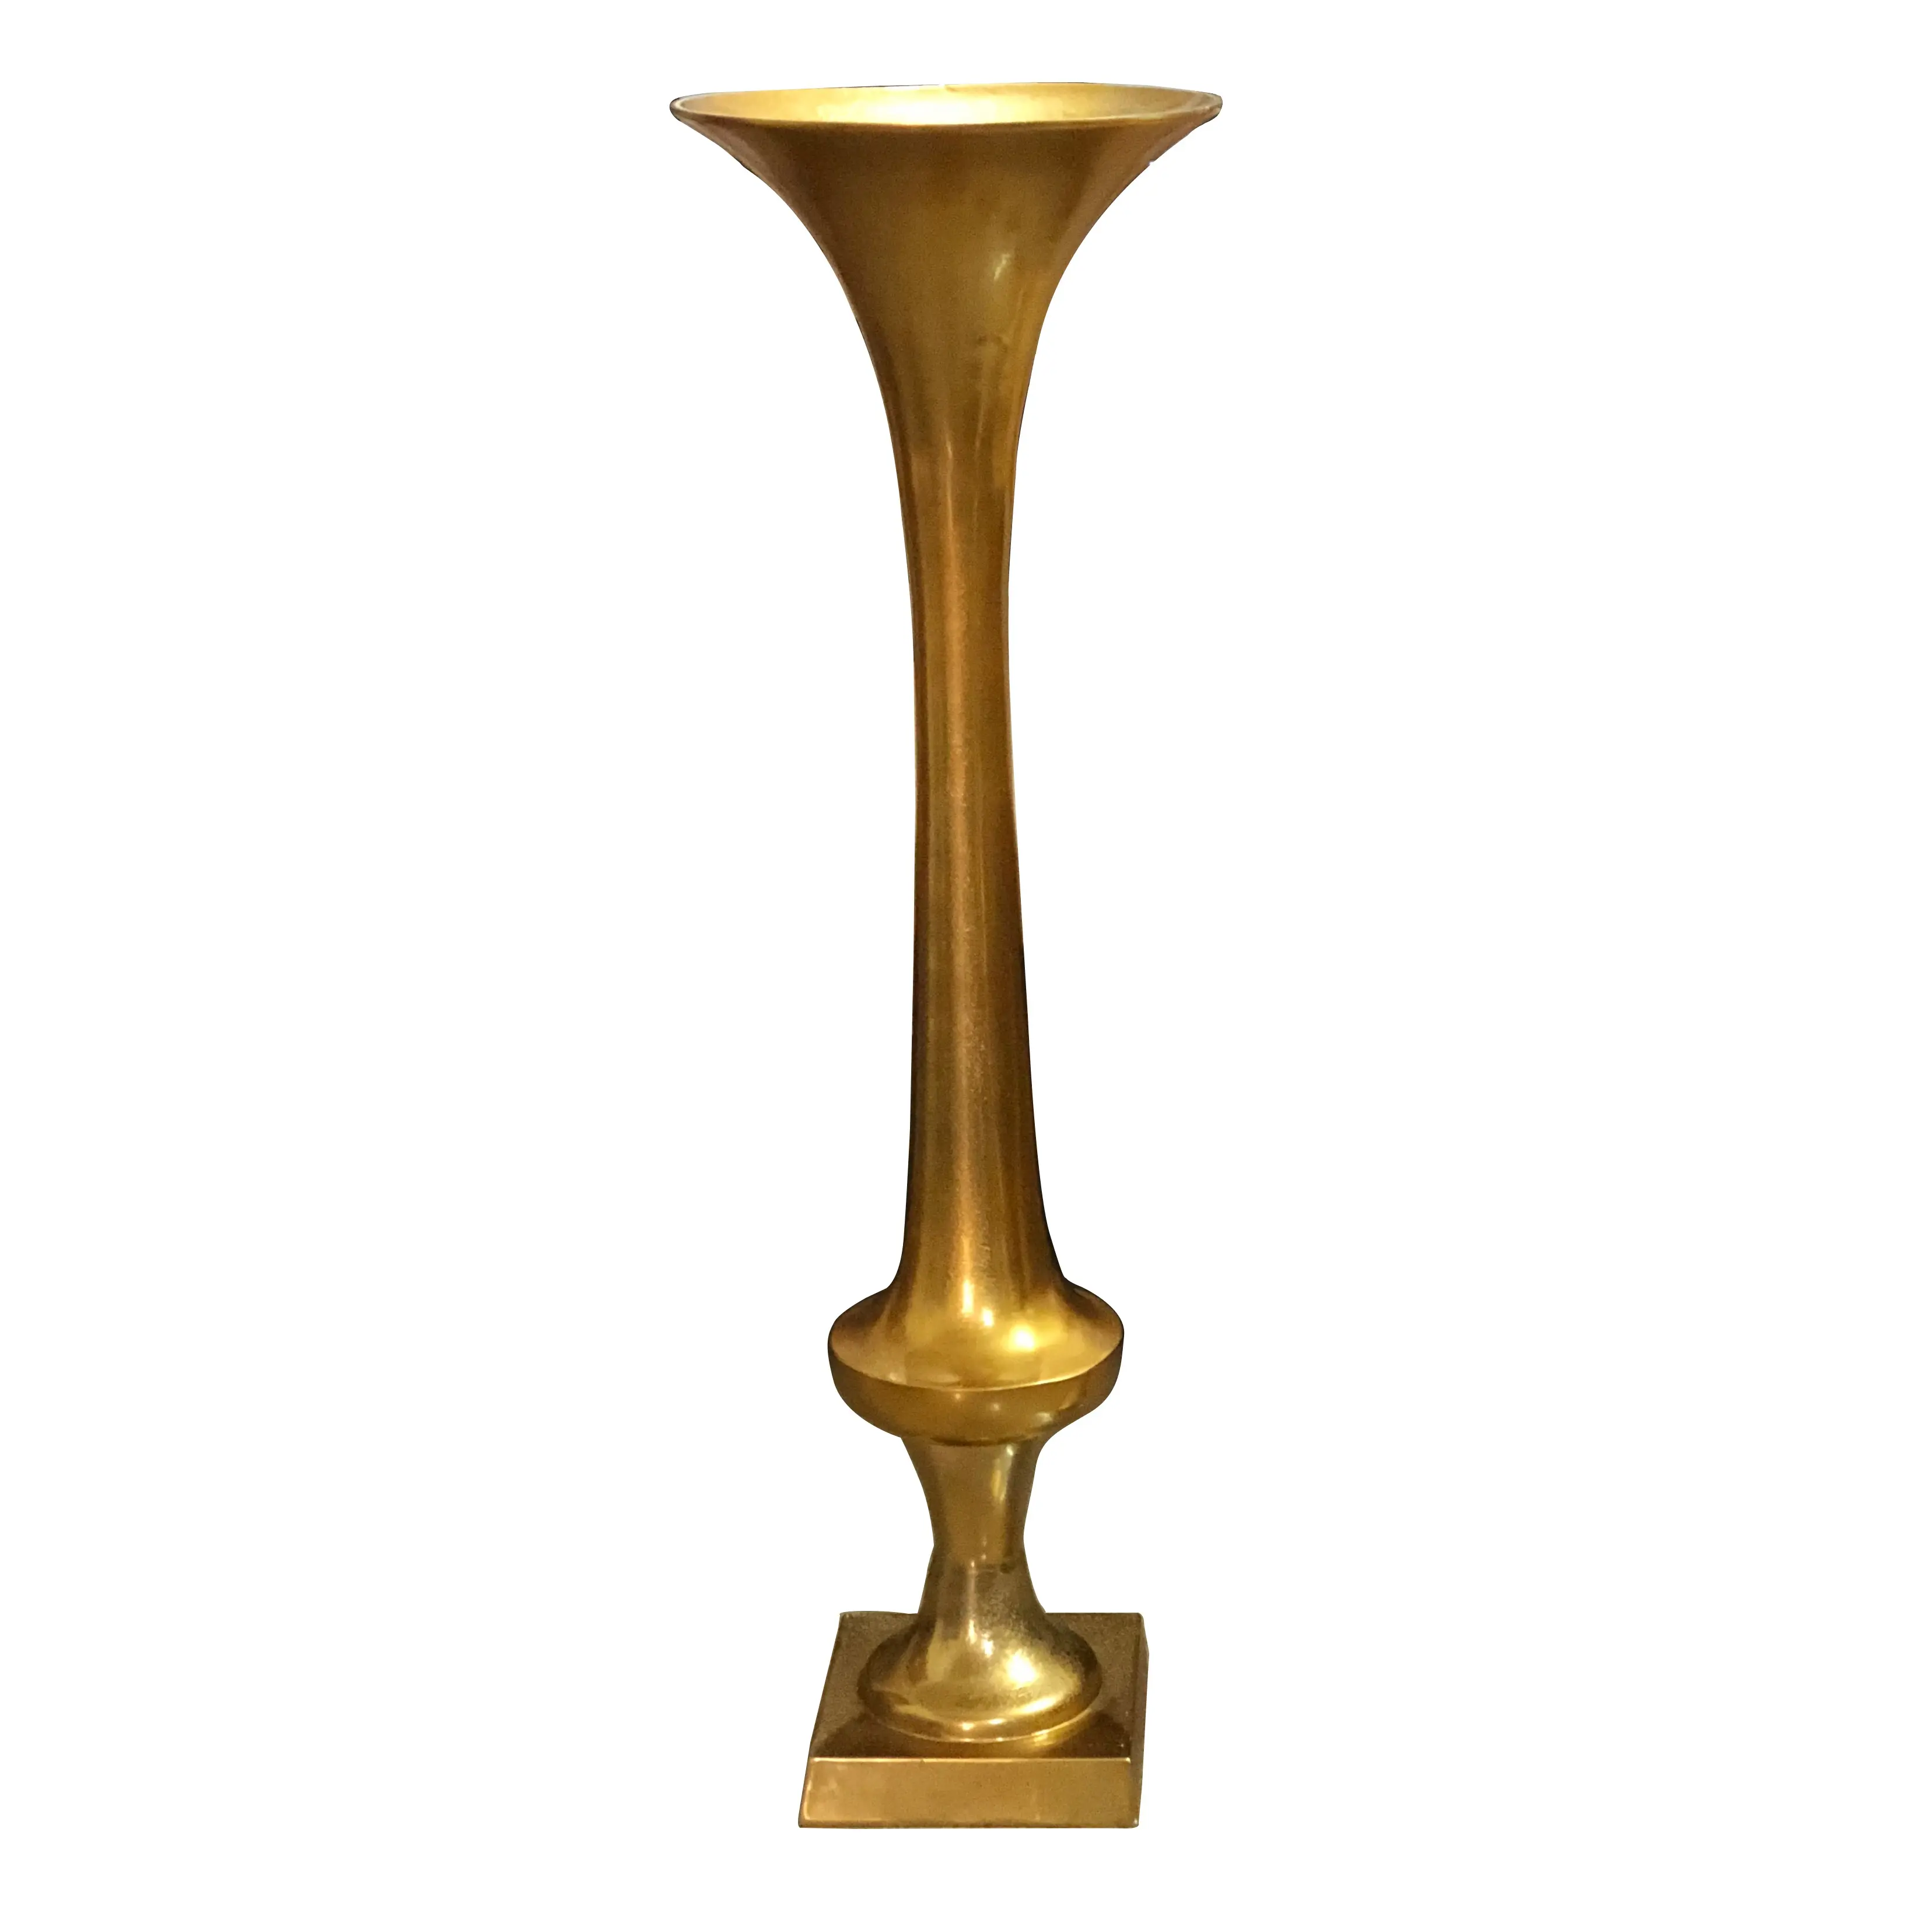 Modern Gold Trumpet Shape Tall Aluminum Vase Large Size Wedding Event Table Top Floor Flower Pot for Centerpiece Decorations